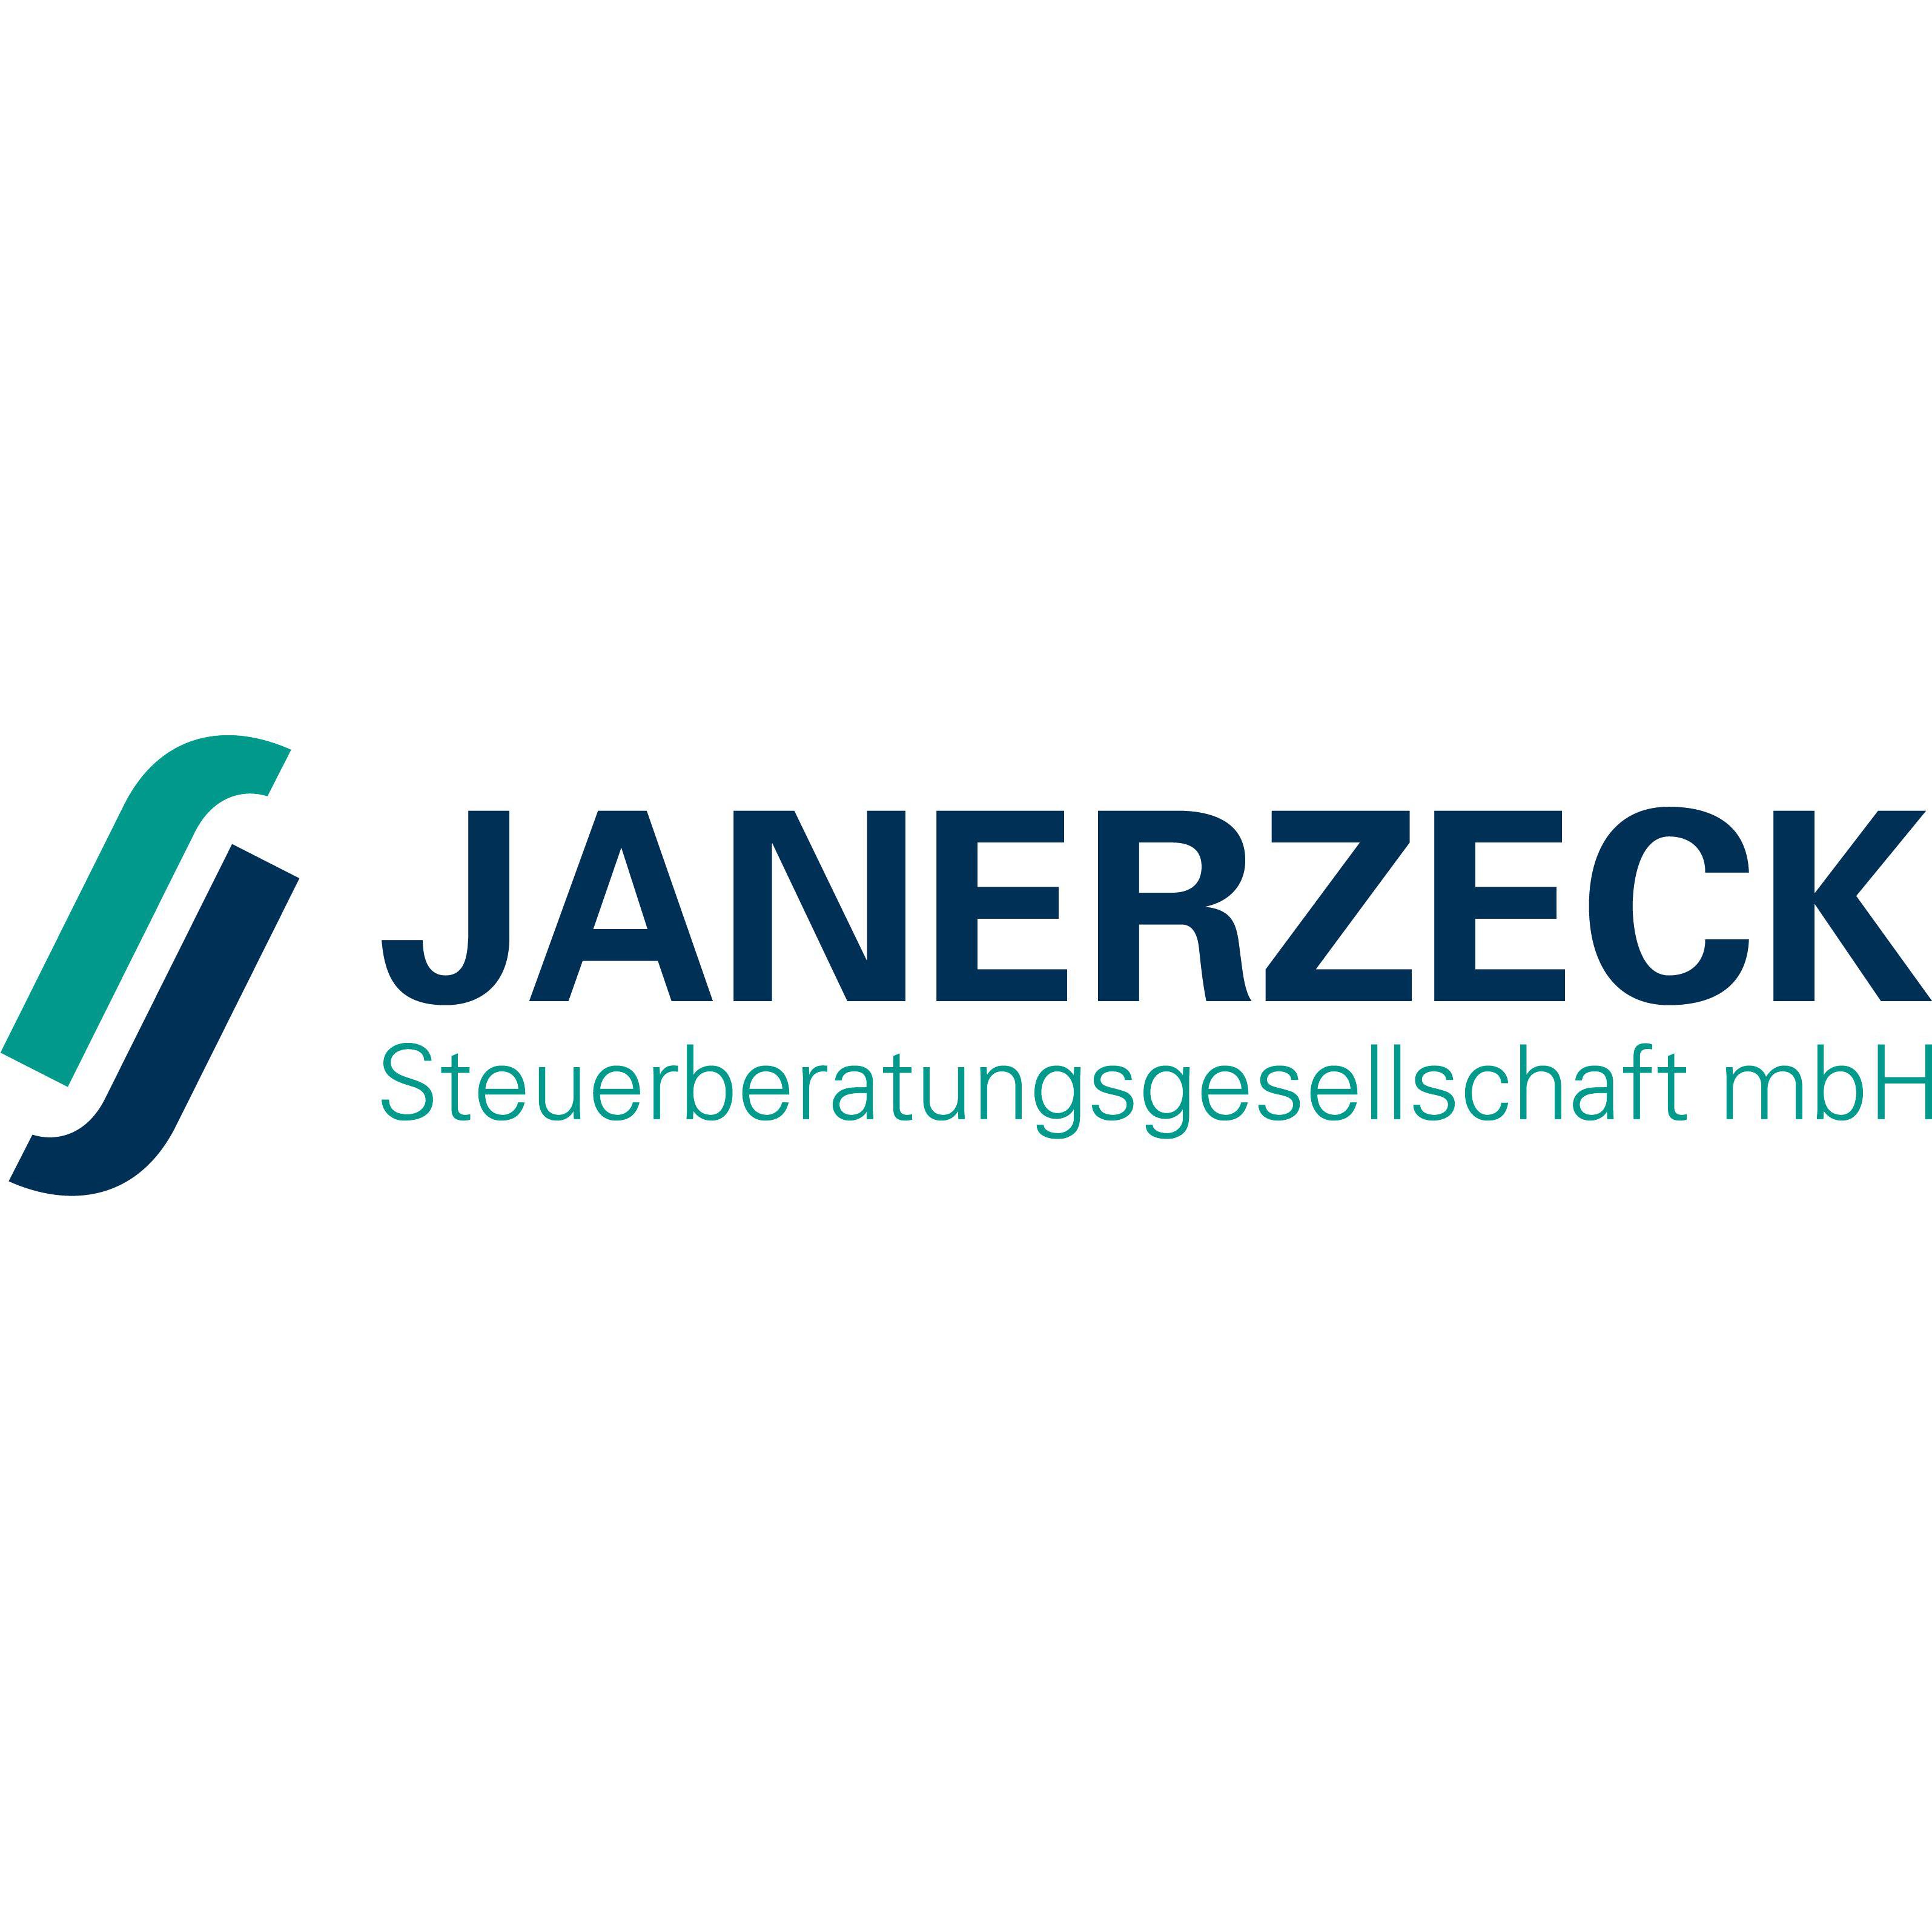 gesellschaft mbH Janerzeck Steuerberatungs- in Zwickau - Logo